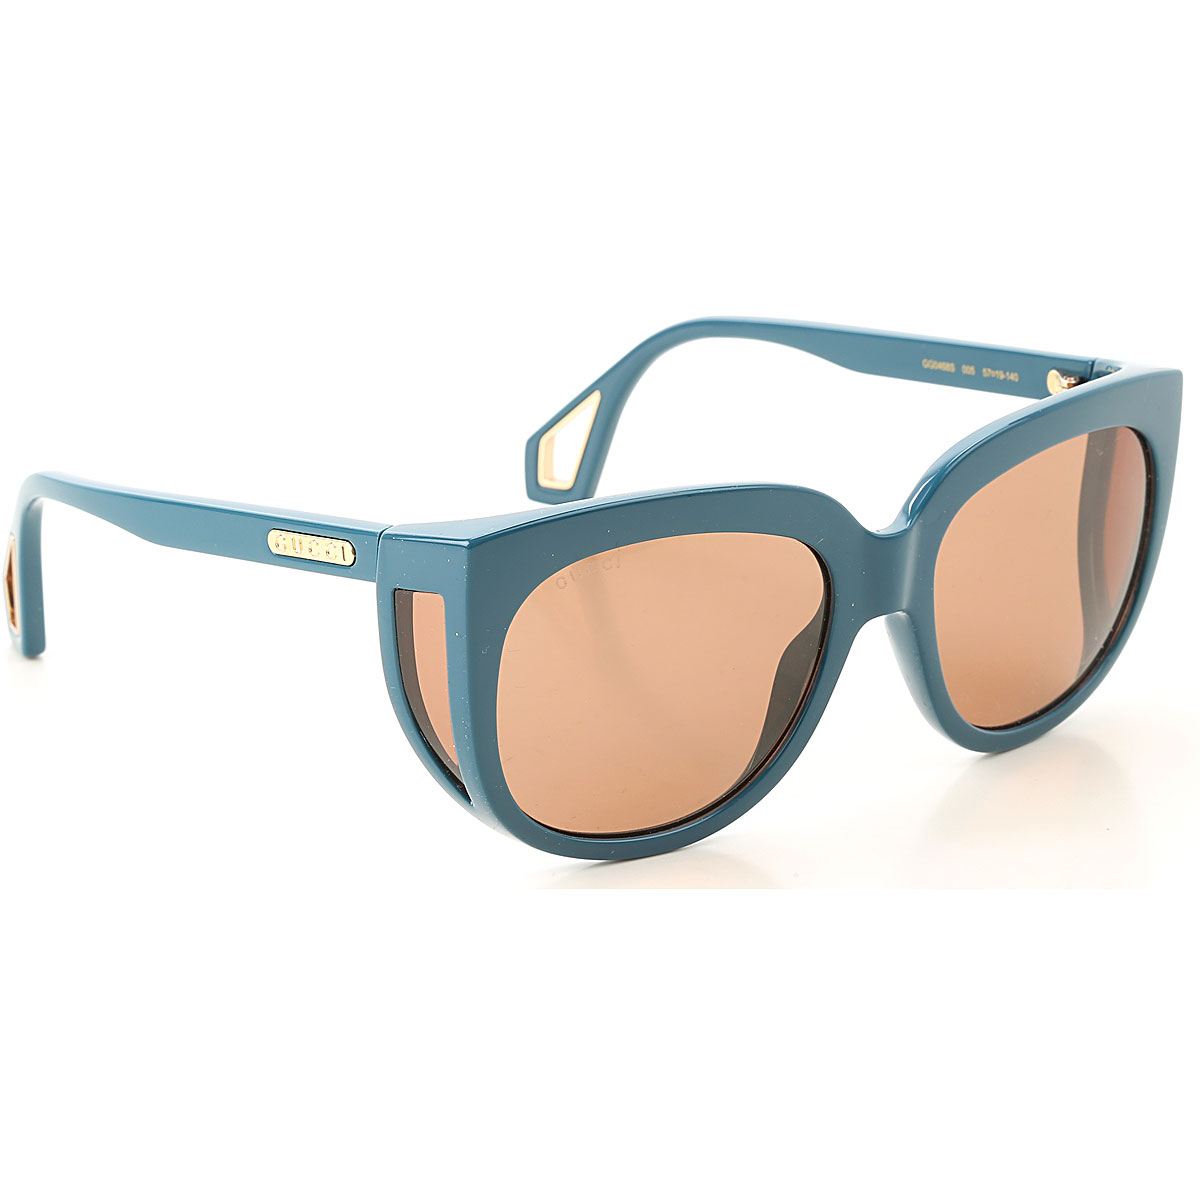 Sunglasses Gucci, Style code: gg0468s-005-N31